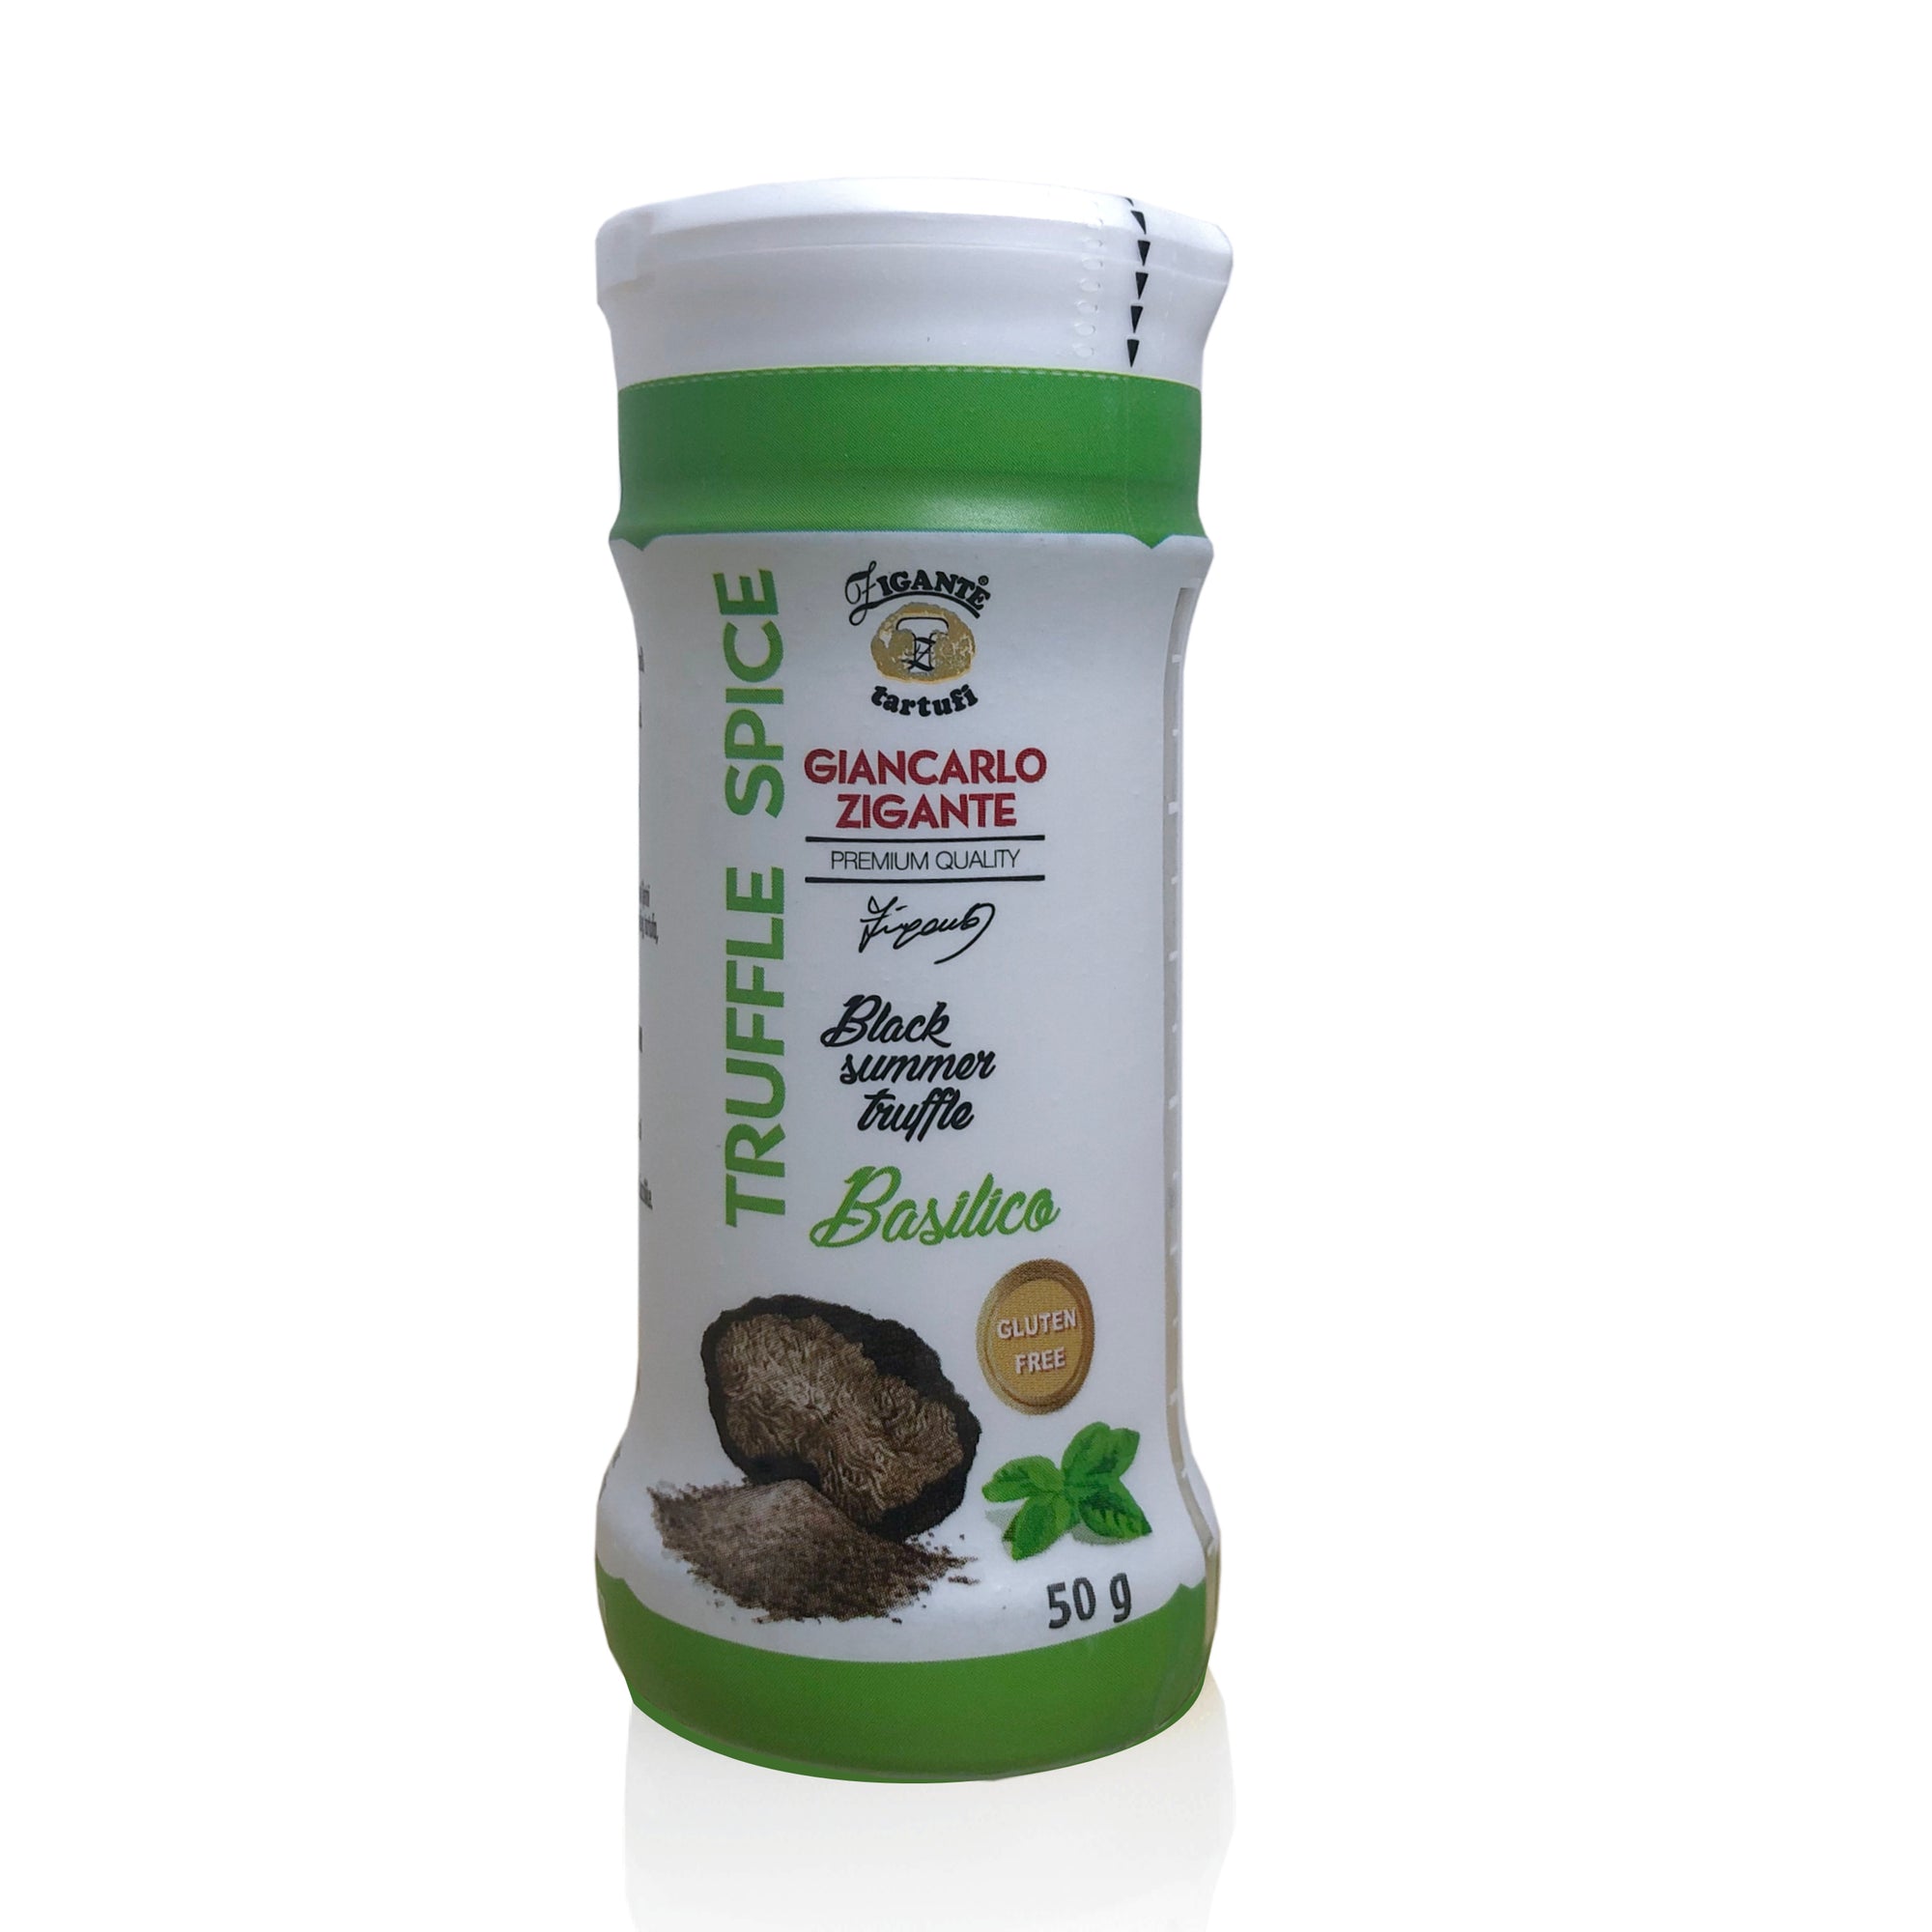 Truffle spices Truffle Spice Basilico - Zigante Tartufi Online Shop, Truffle Shop, Truffle Products